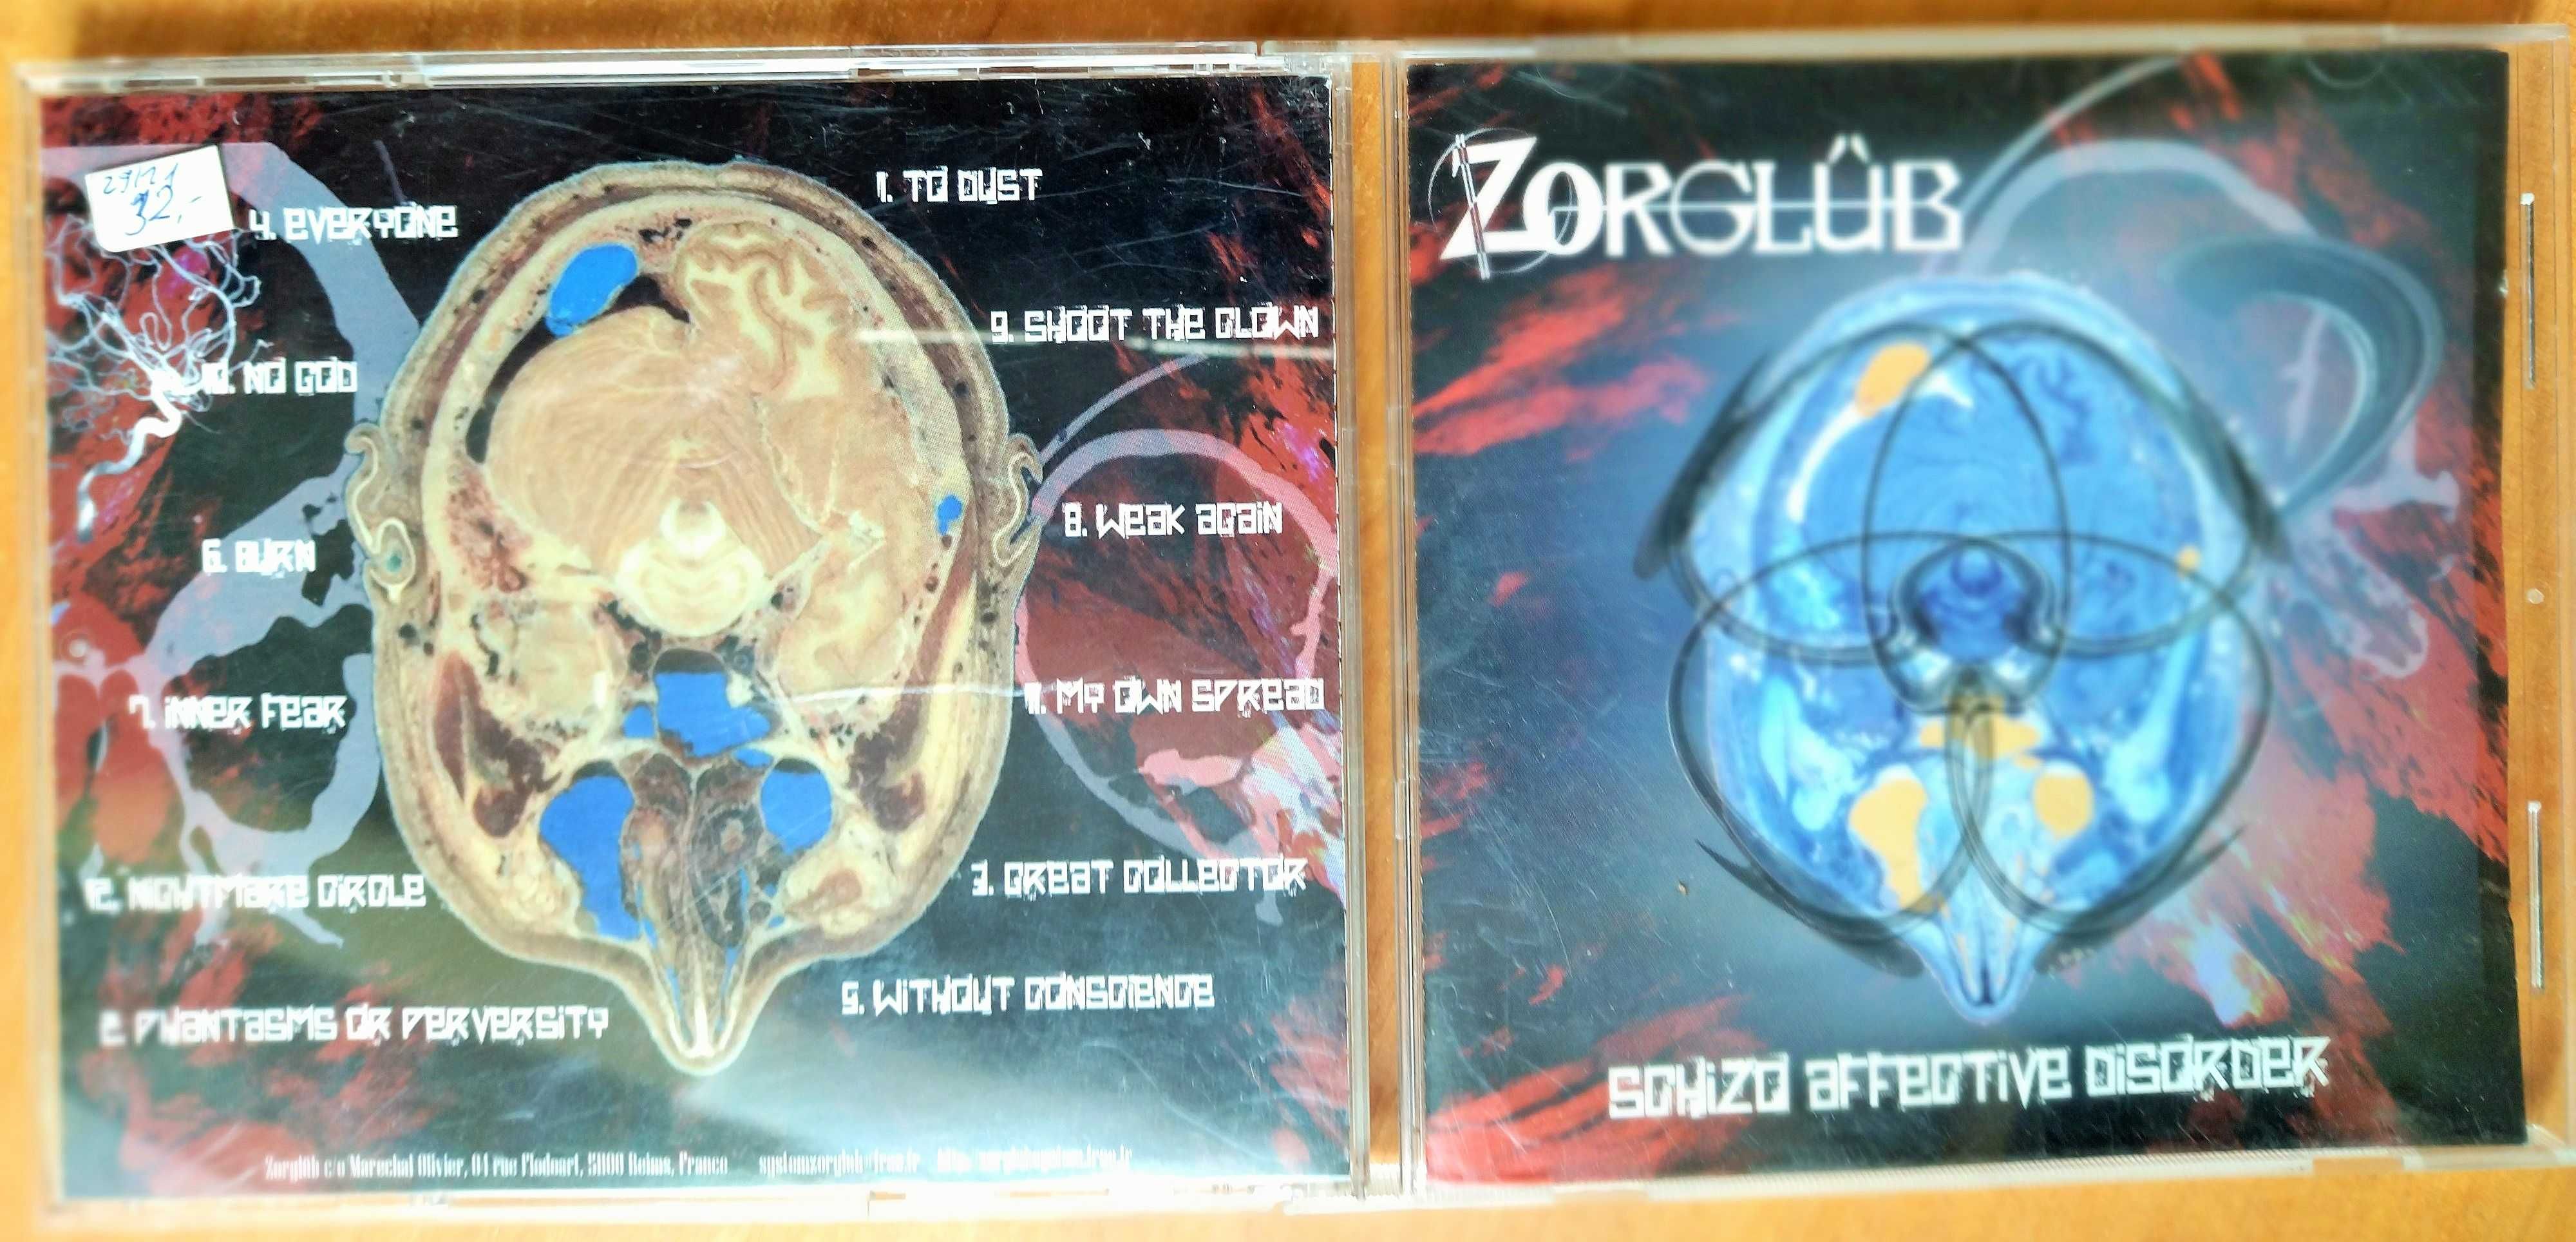 Zorglub Shizo Affective Disorder CD